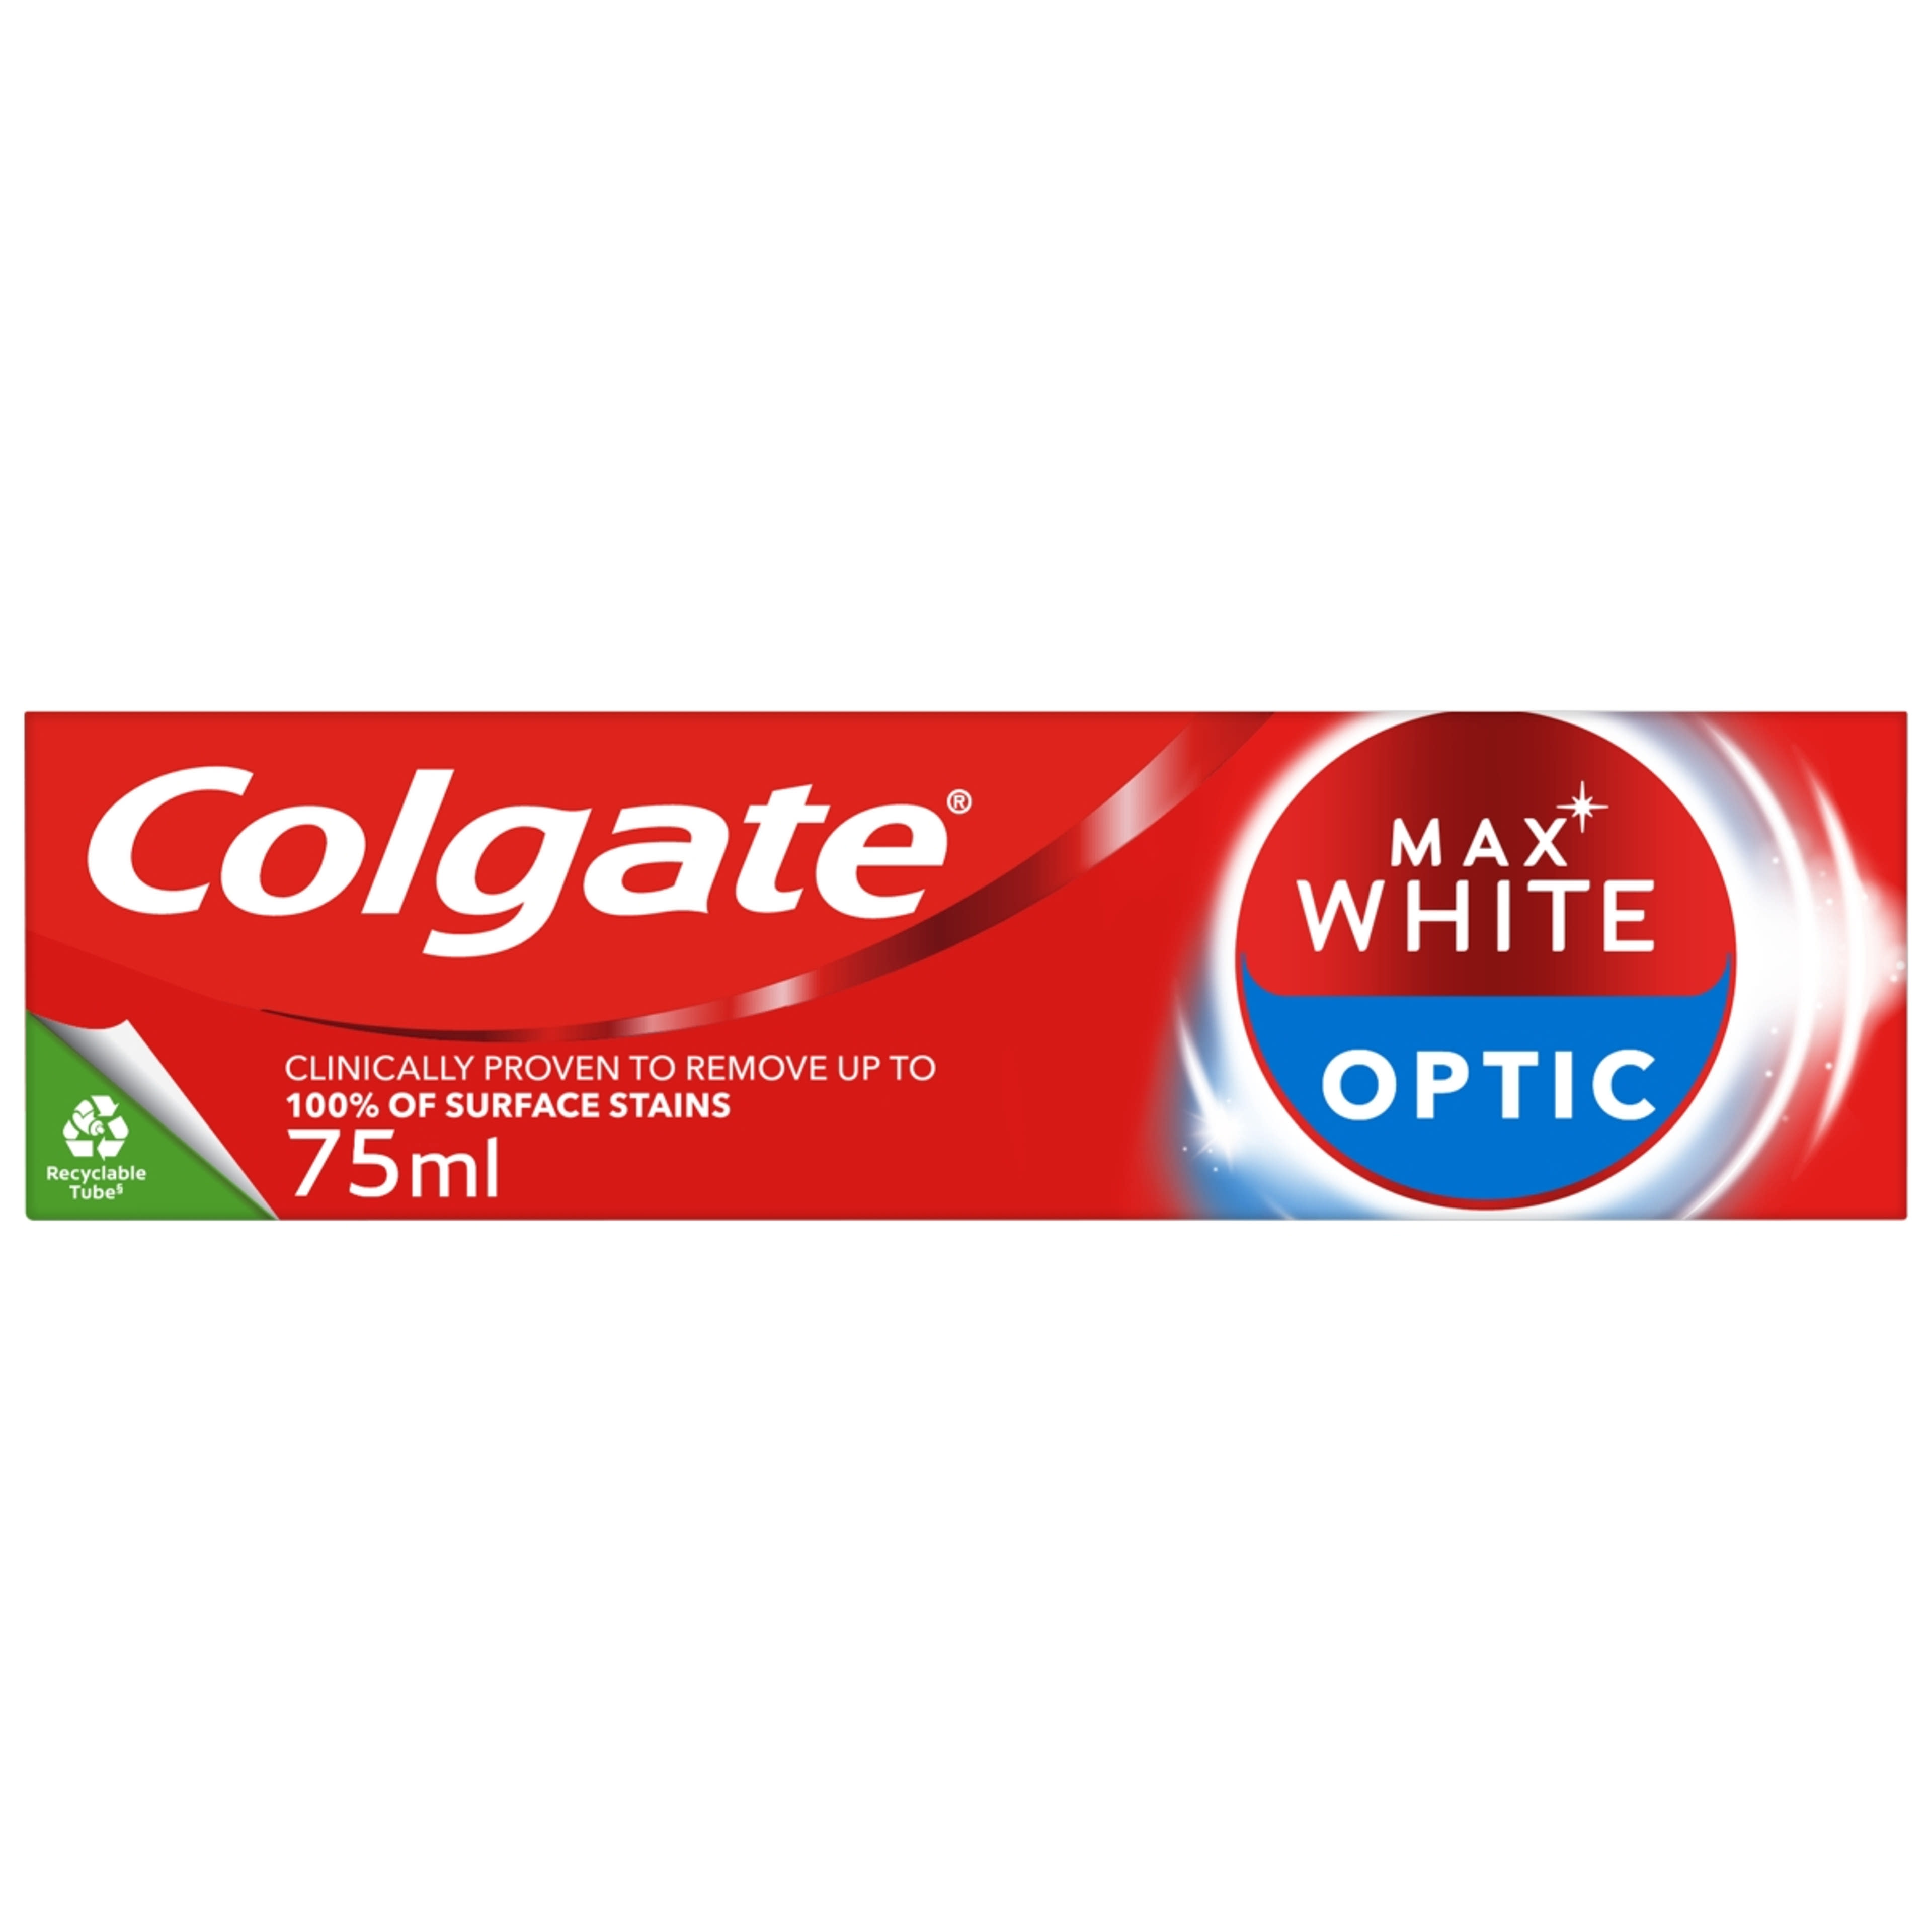 Colgate Max White One Optic fogfehérítő fogkrém - 75 ml-9